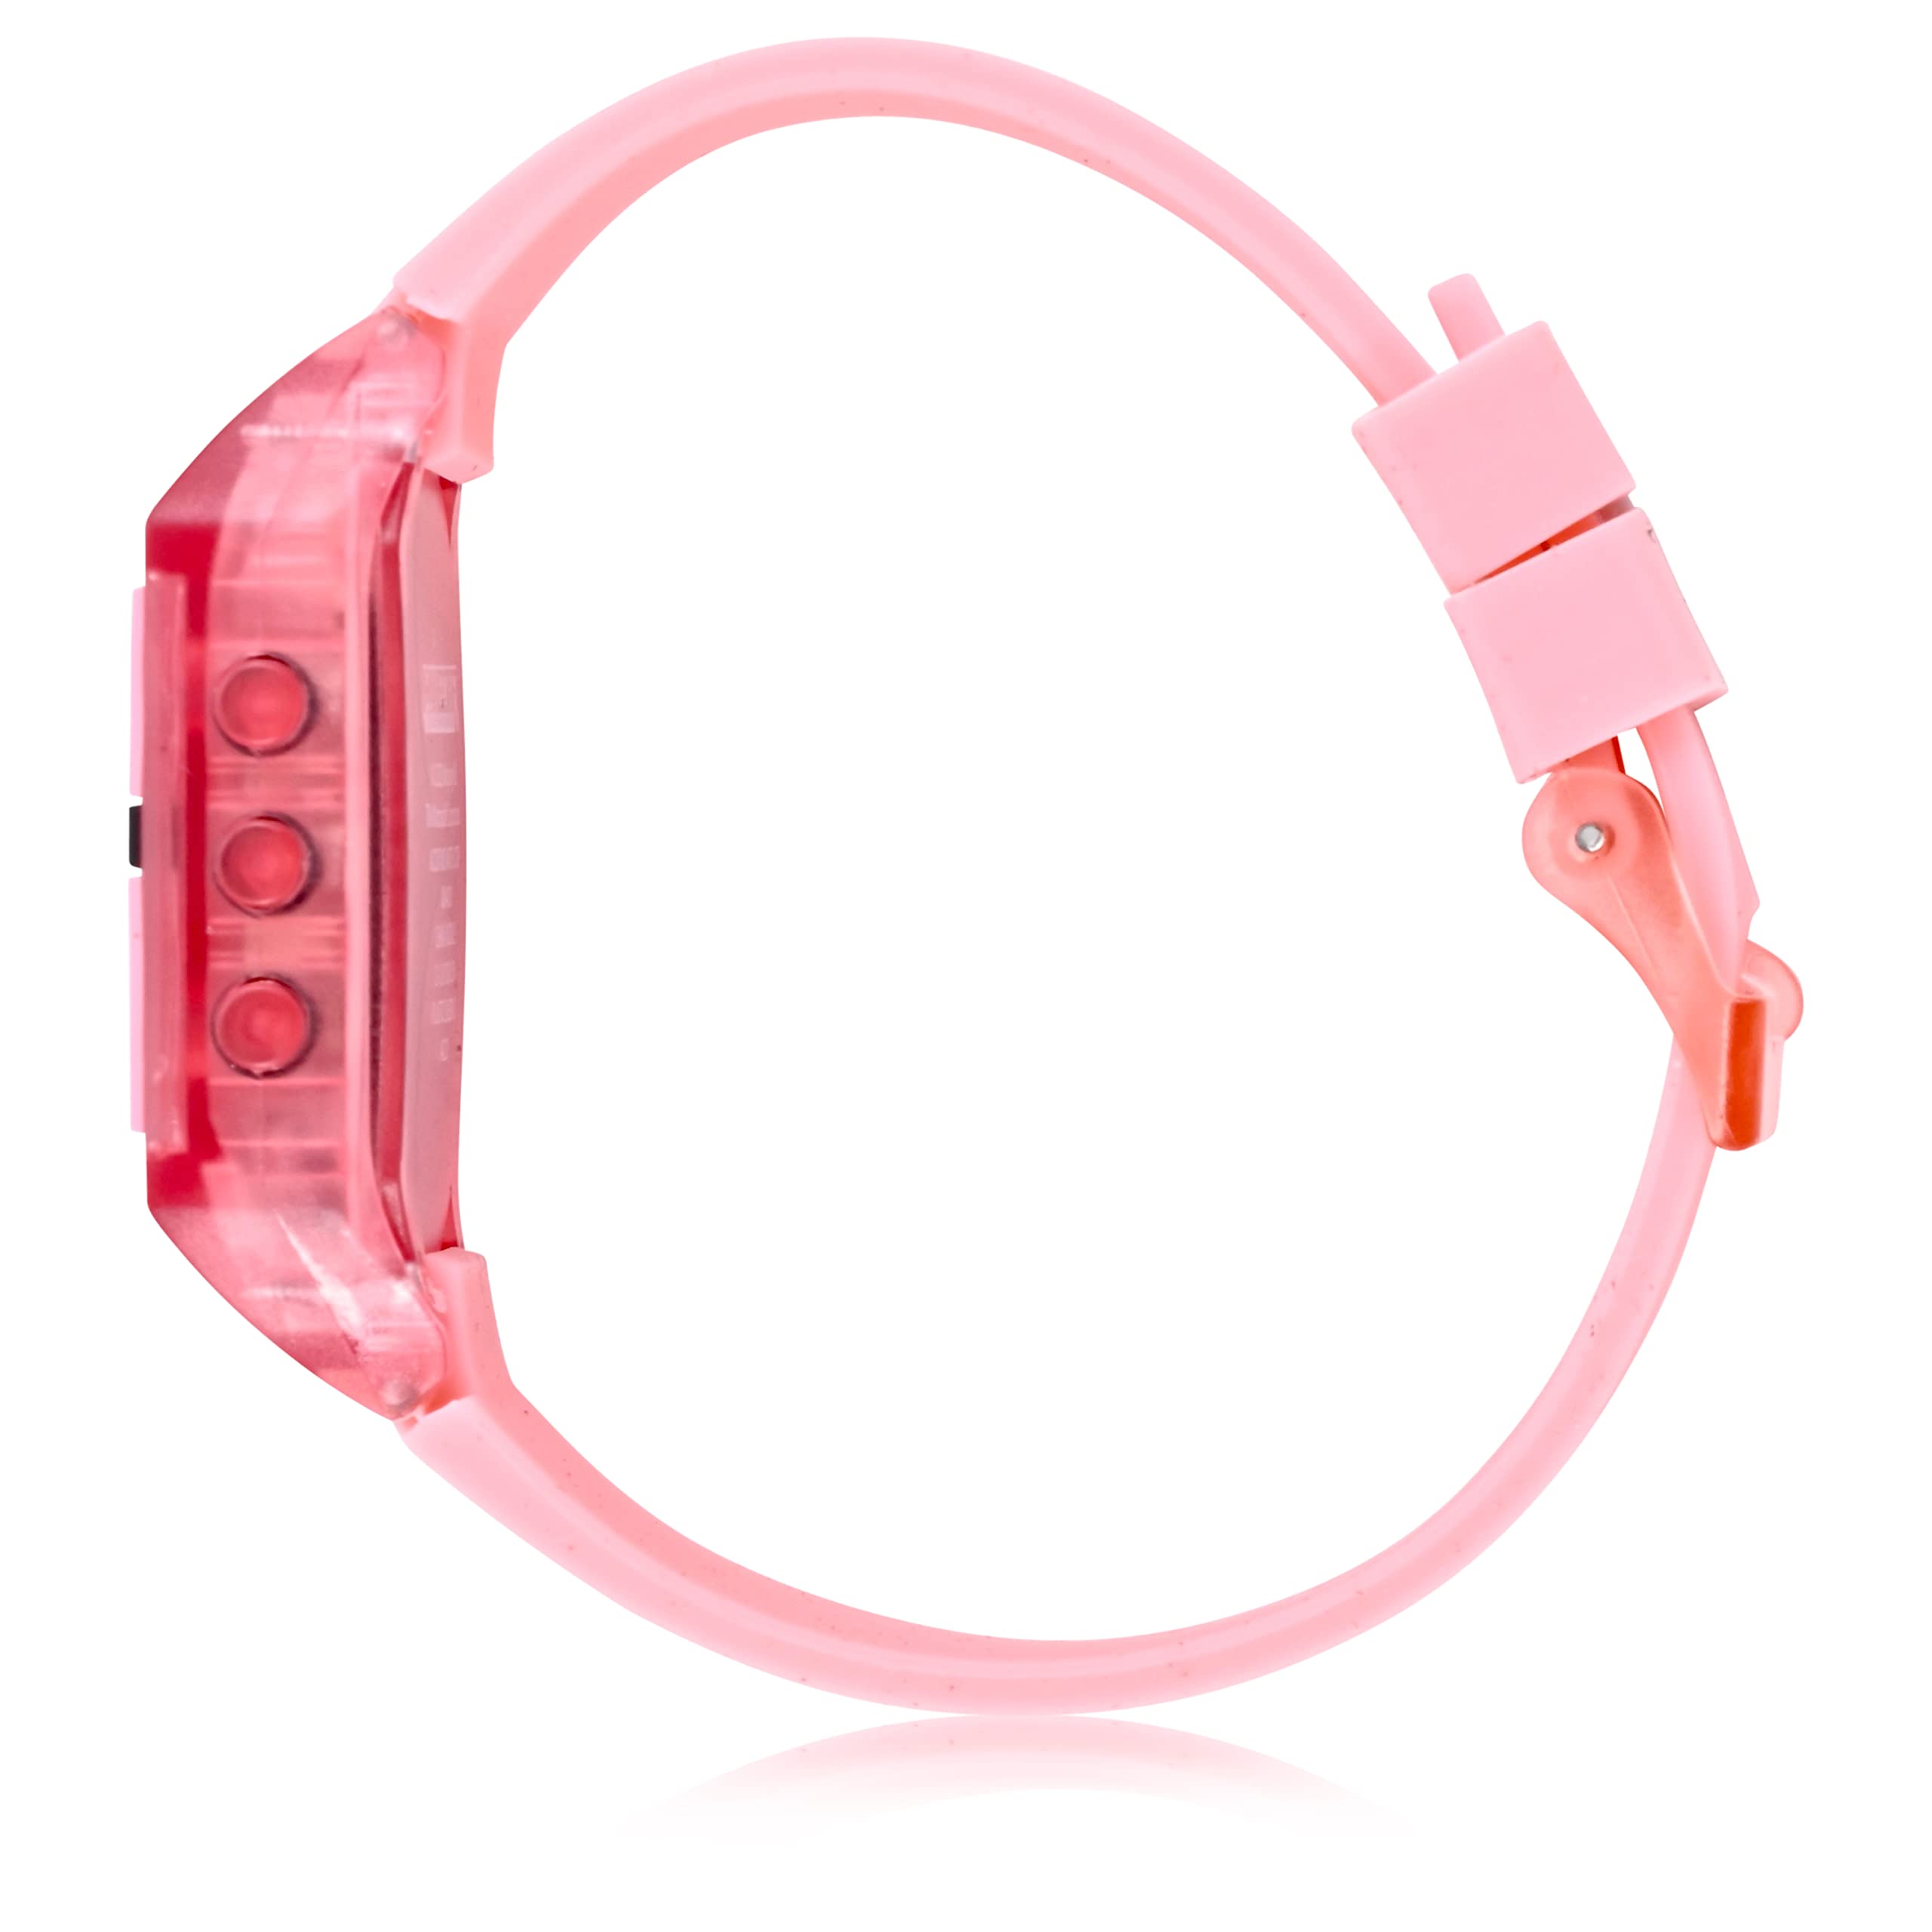 Microsoft Minecraft Kids Digital Watch - LED Flashing Light, LCD Display, Kids, Girls Watch, Silicone Strap in Pink (Model: Min4031AZ)